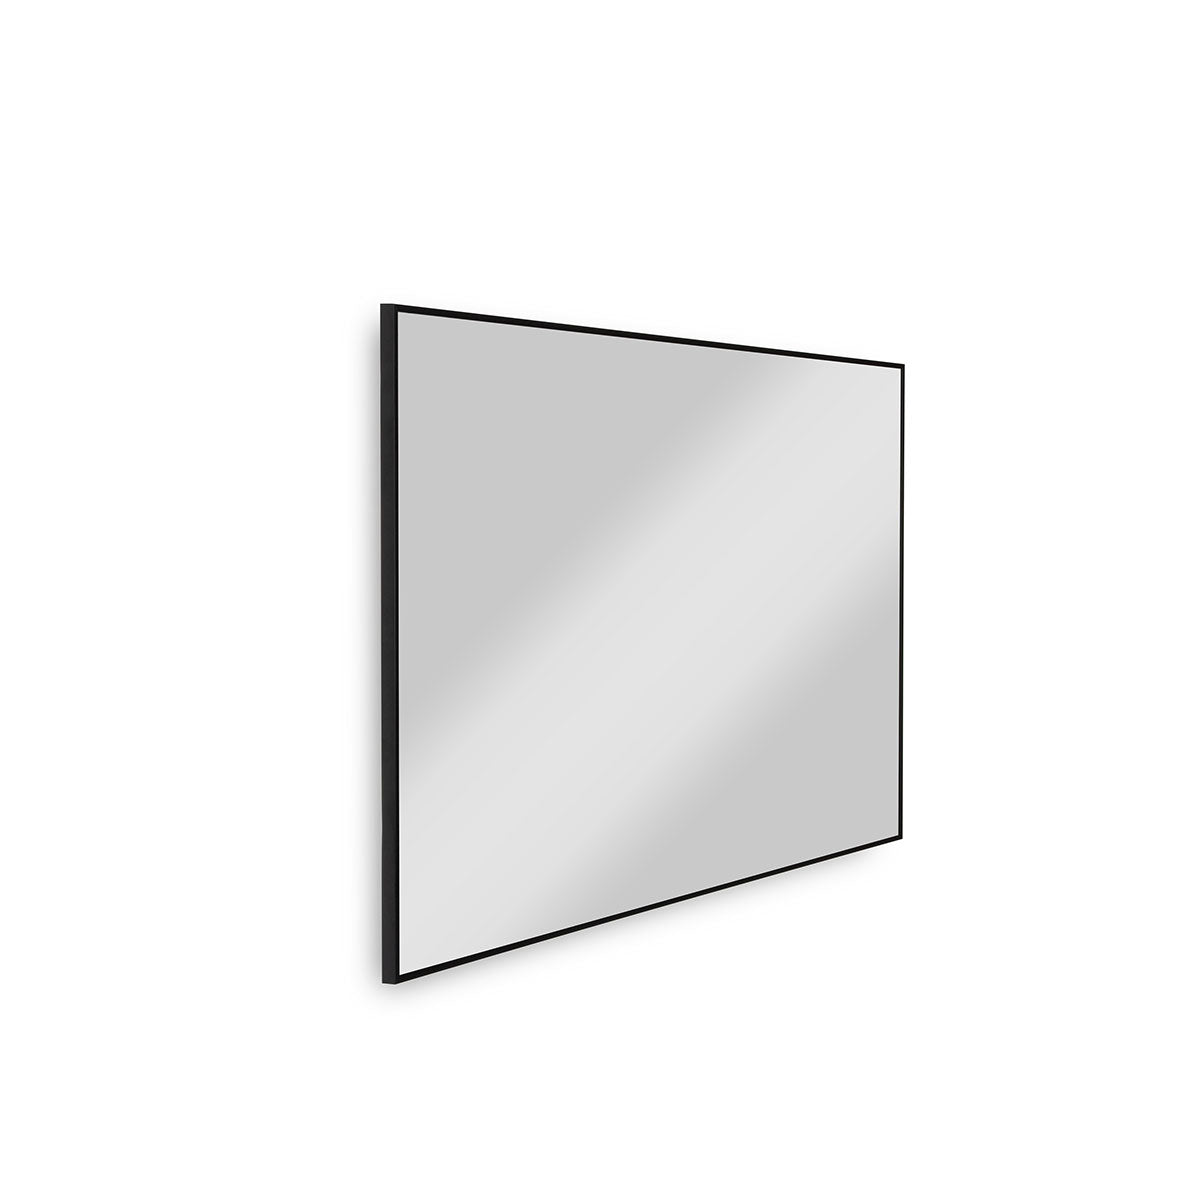 60"w x 32"h Aluminum Rectangle Bathroom Wall Mirror (Matte Black) - iStyle Bath